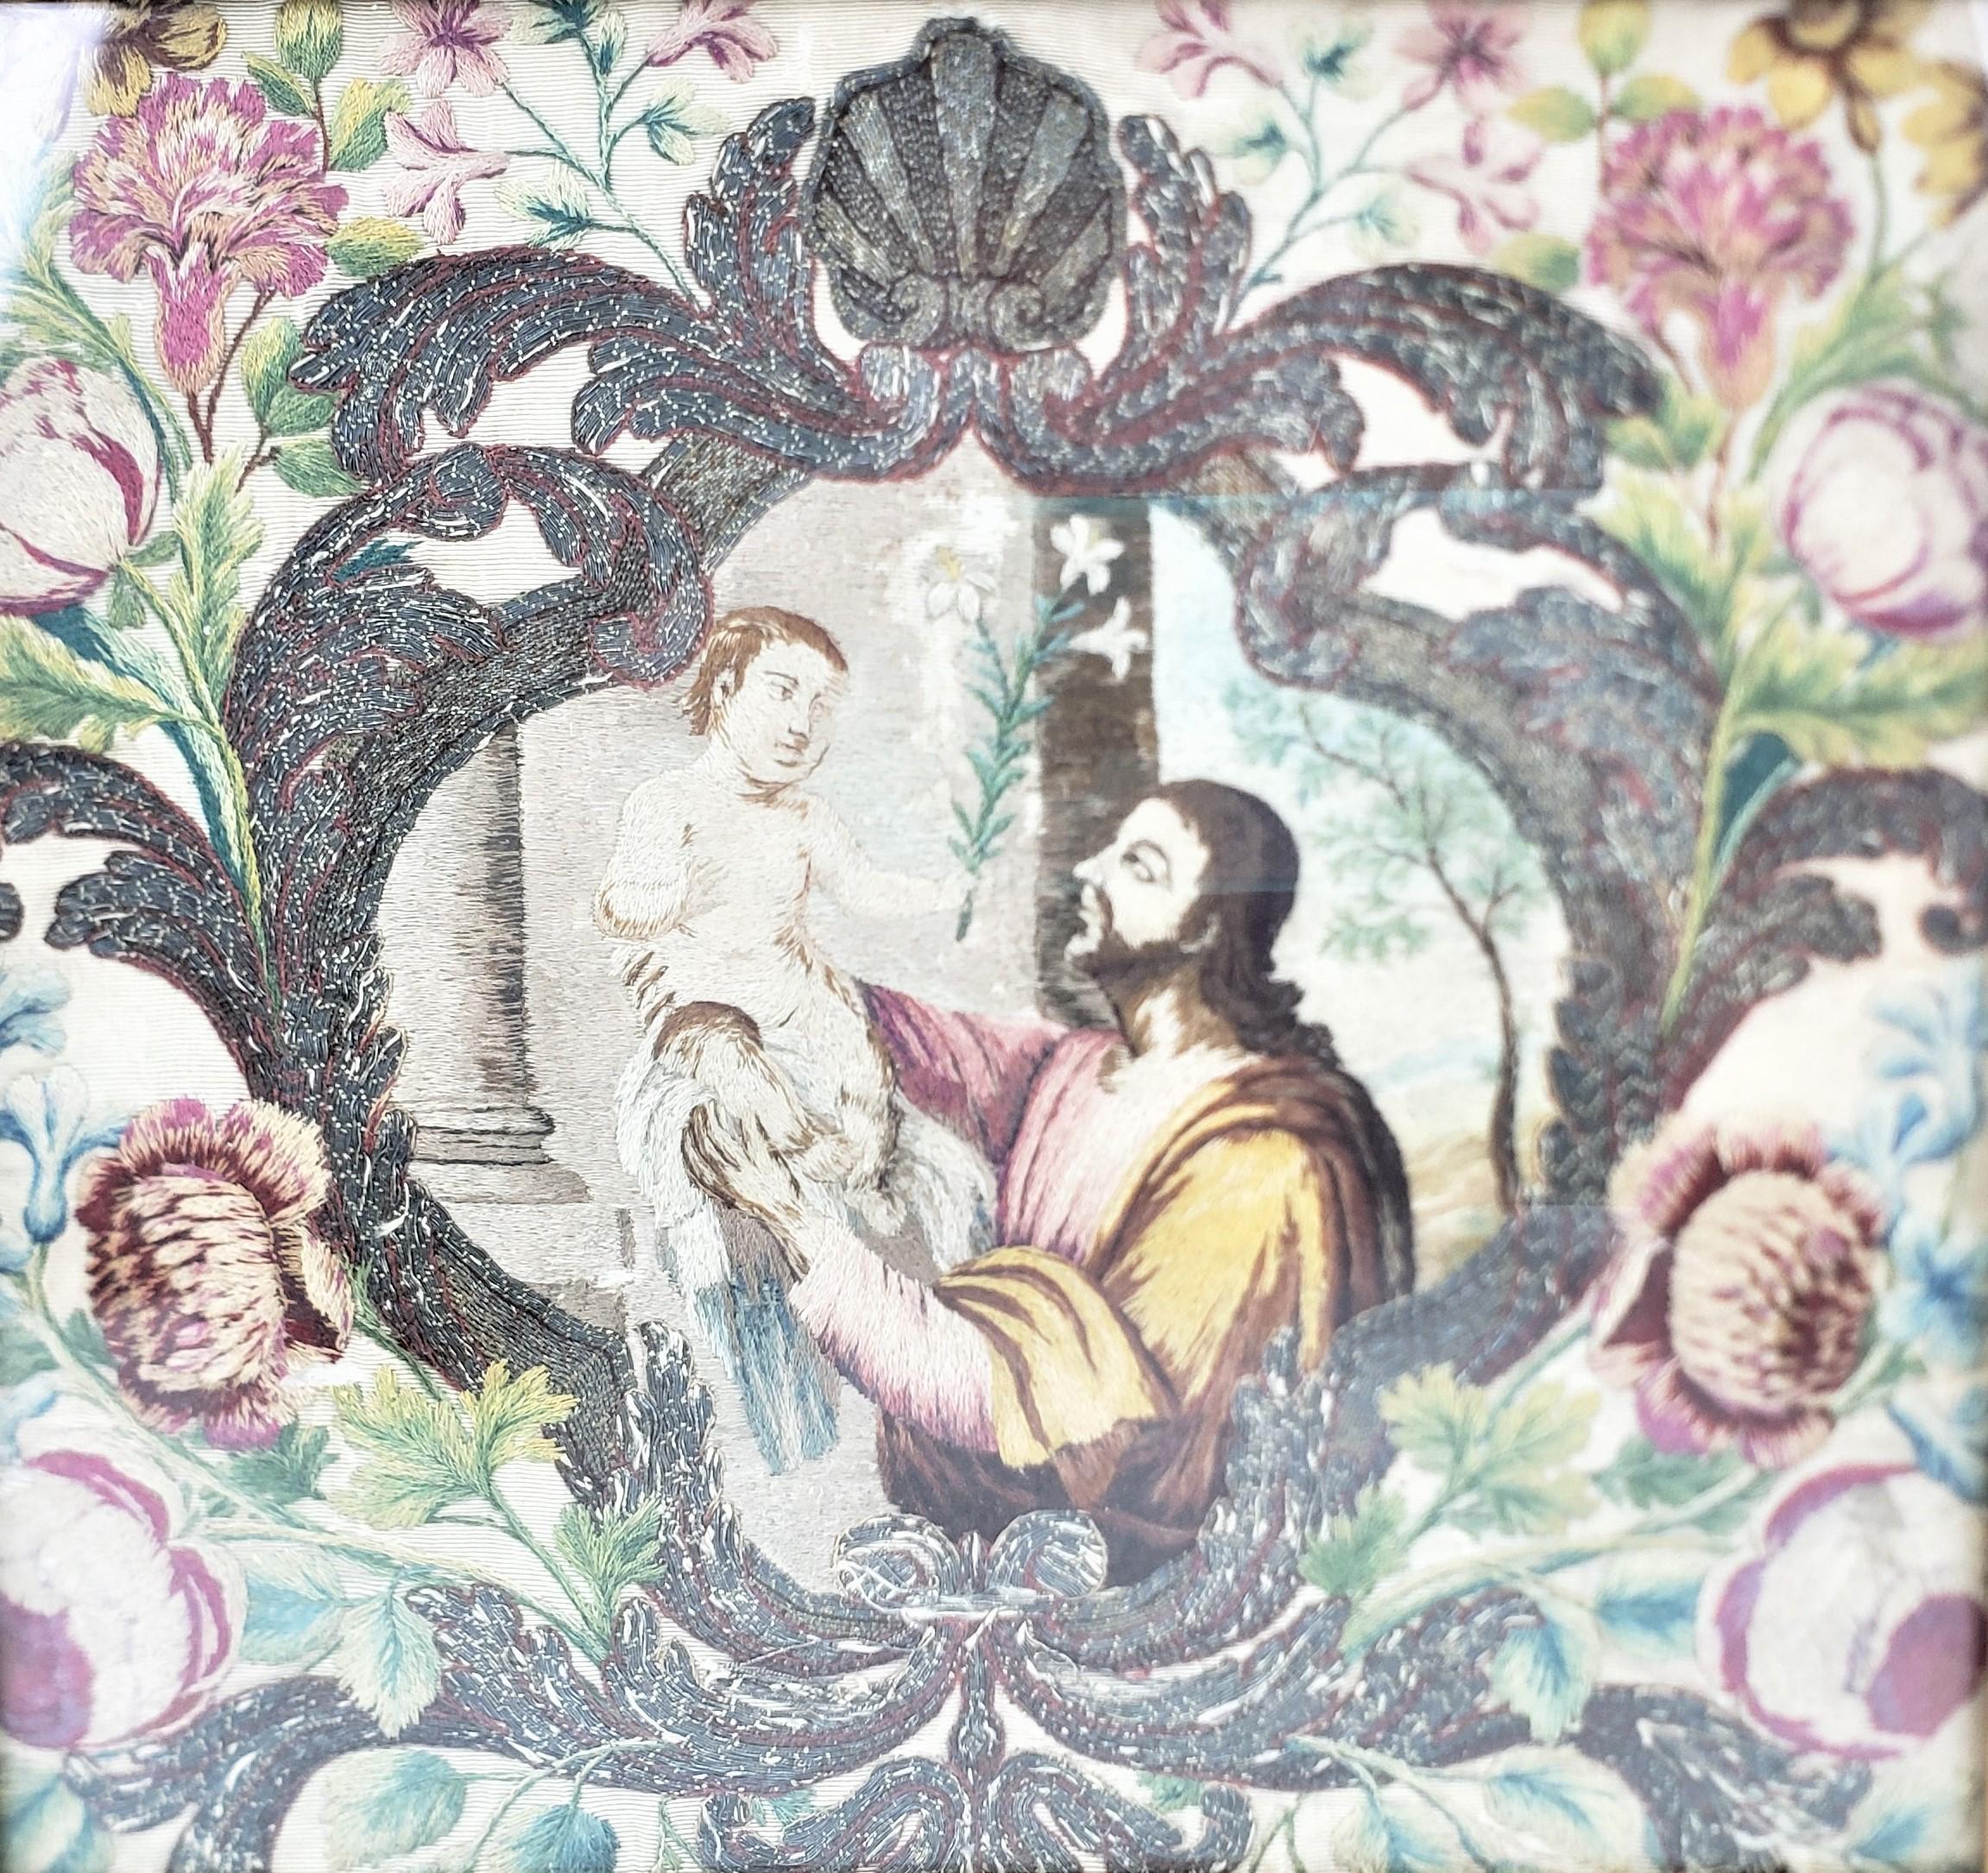 Renaissance Revival Antique Renaissance Styled Hand-Embroidered Sampler Panel or Tapestry Fragment For Sale